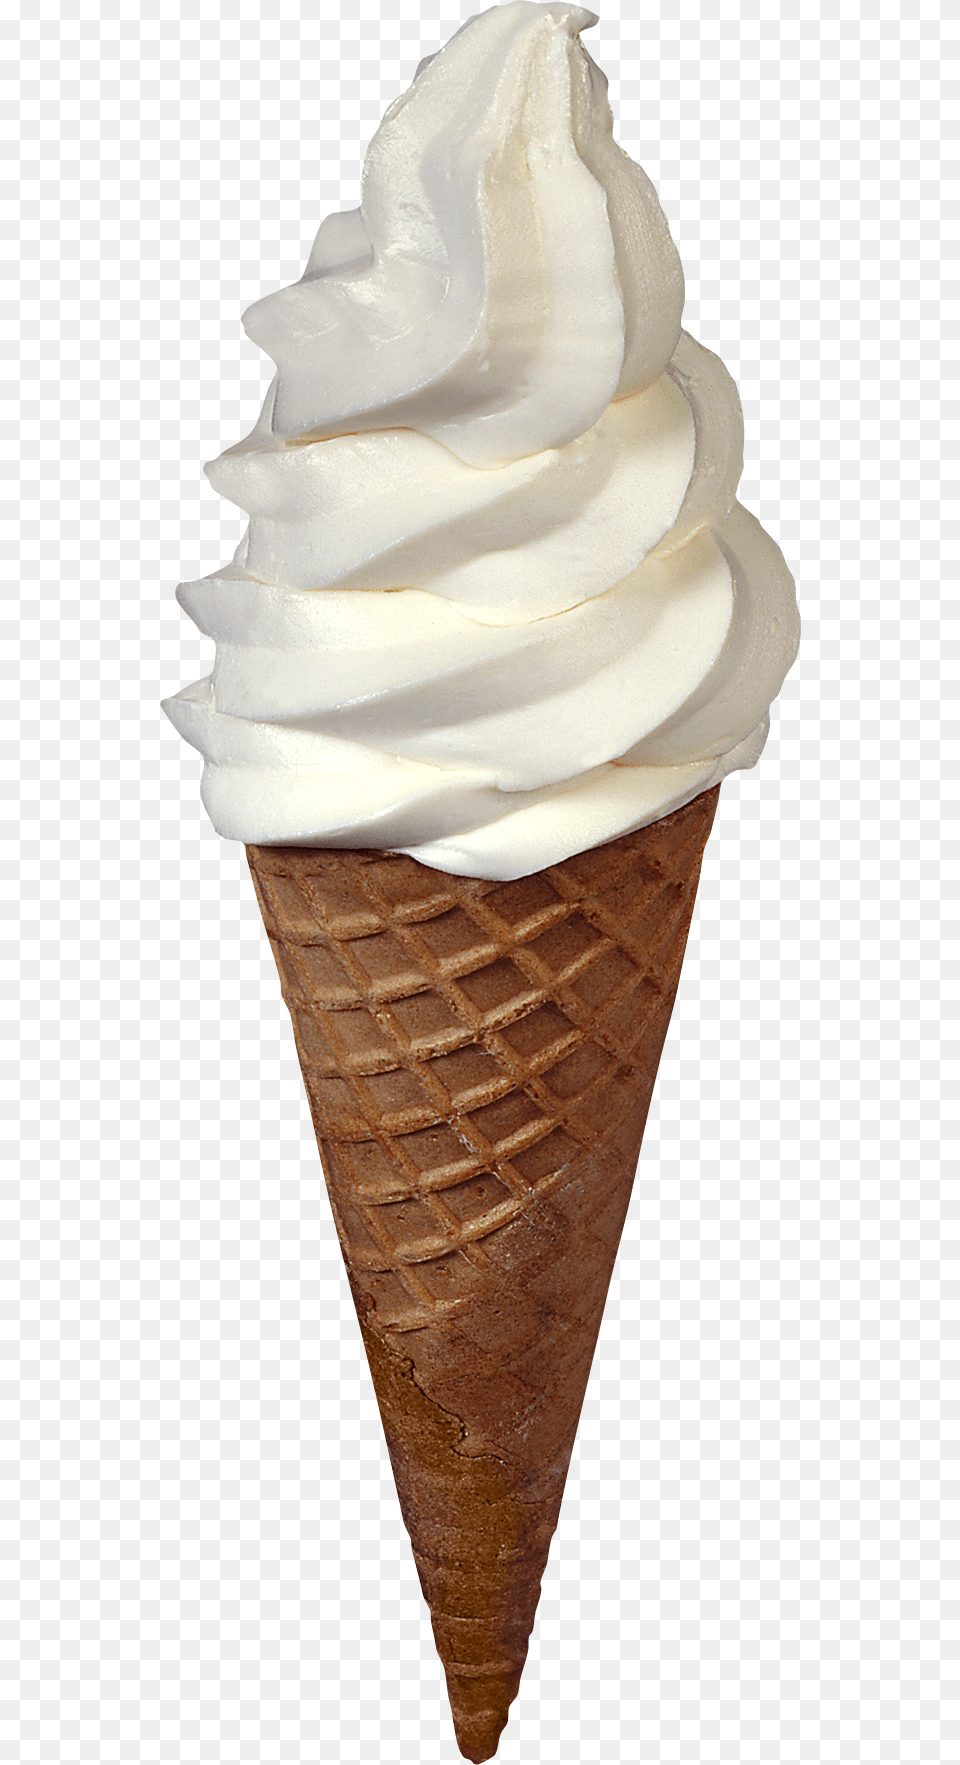 Ice Cream Image Frozen Yogurt On A Cone, Dessert, Food, Ice Cream, Soft Serve Ice Cream Png